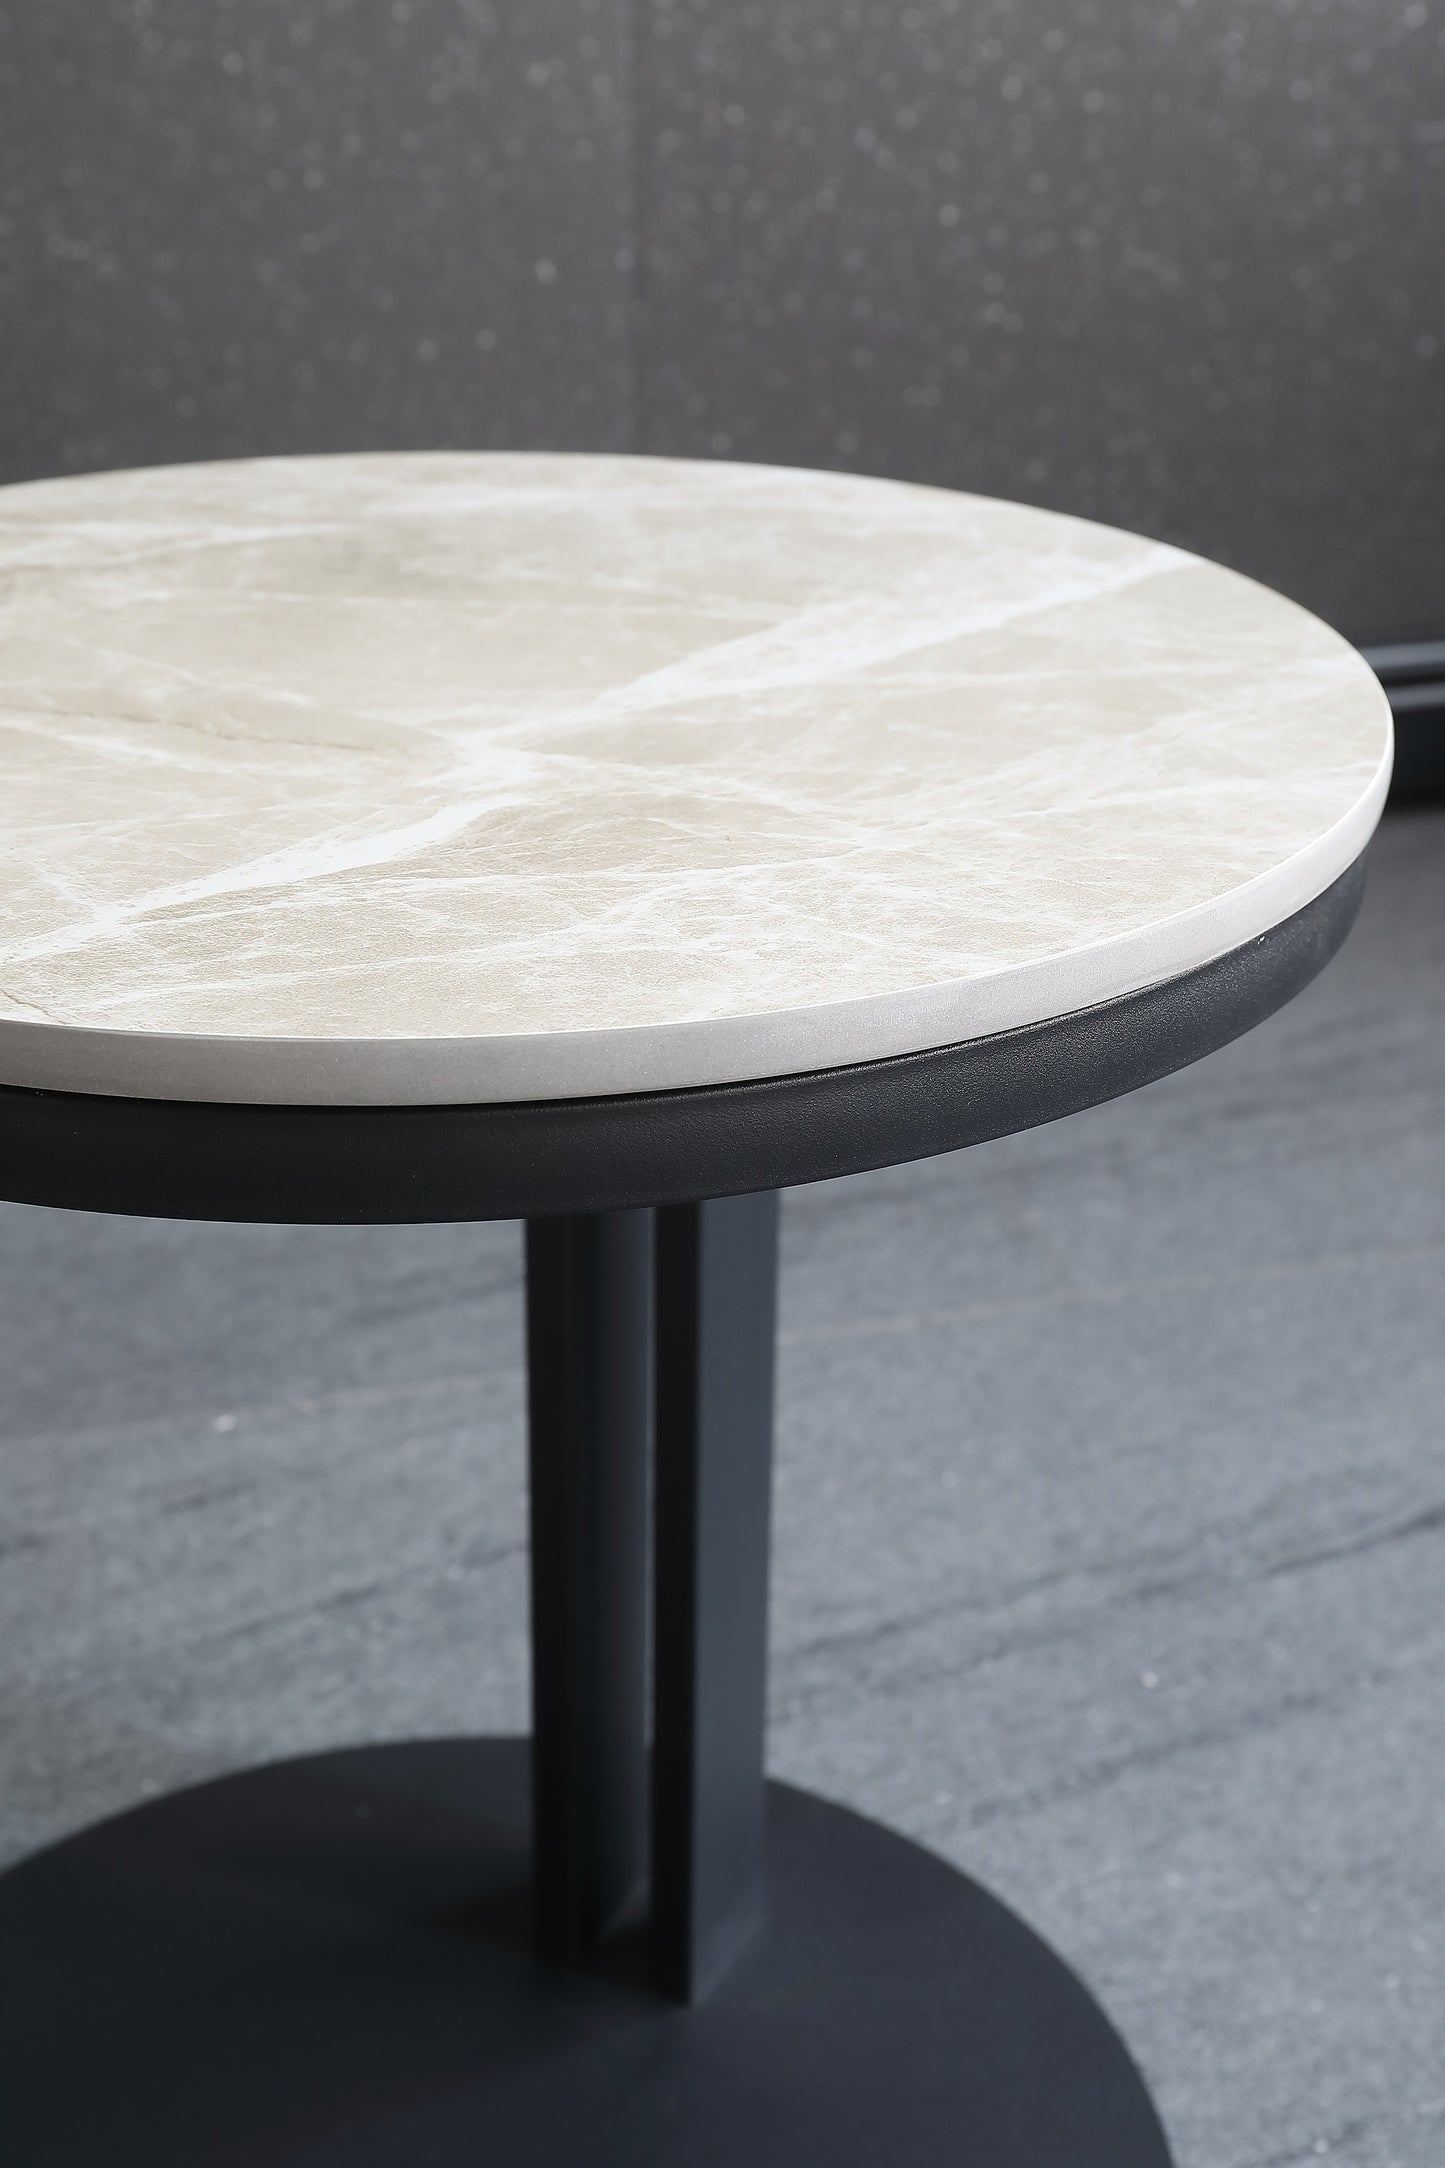 Milo Modern Design 2PC Coffee Table Set Sintered Stone Top With Storage Drawer